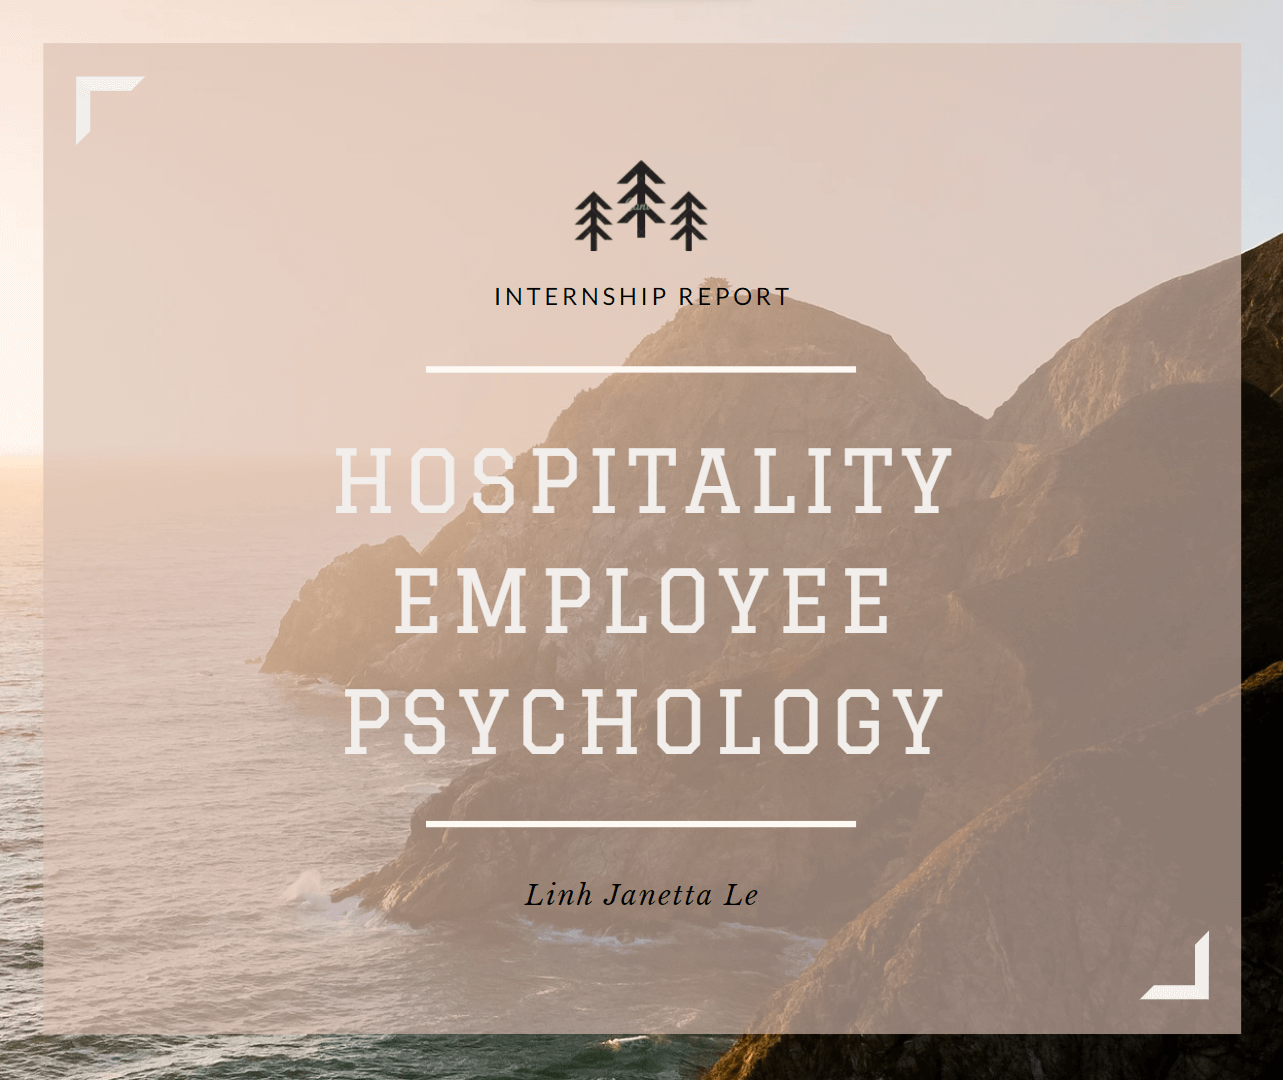 ♡ Internship Report Sample – “Hospitality Employee Psychology” ♡